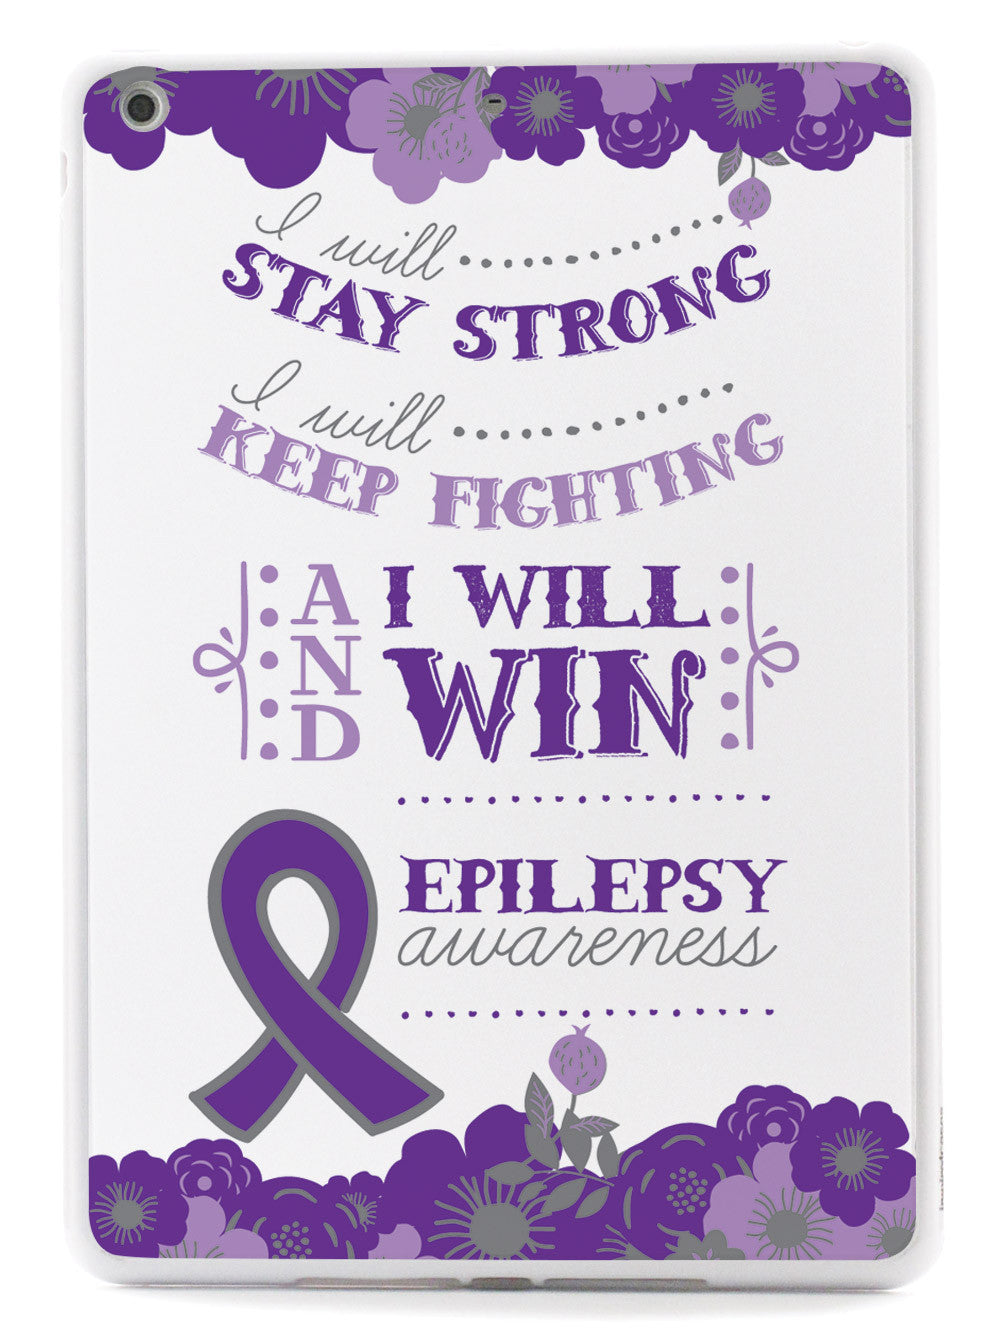 I Will Win - Epilepsy Awareness Case